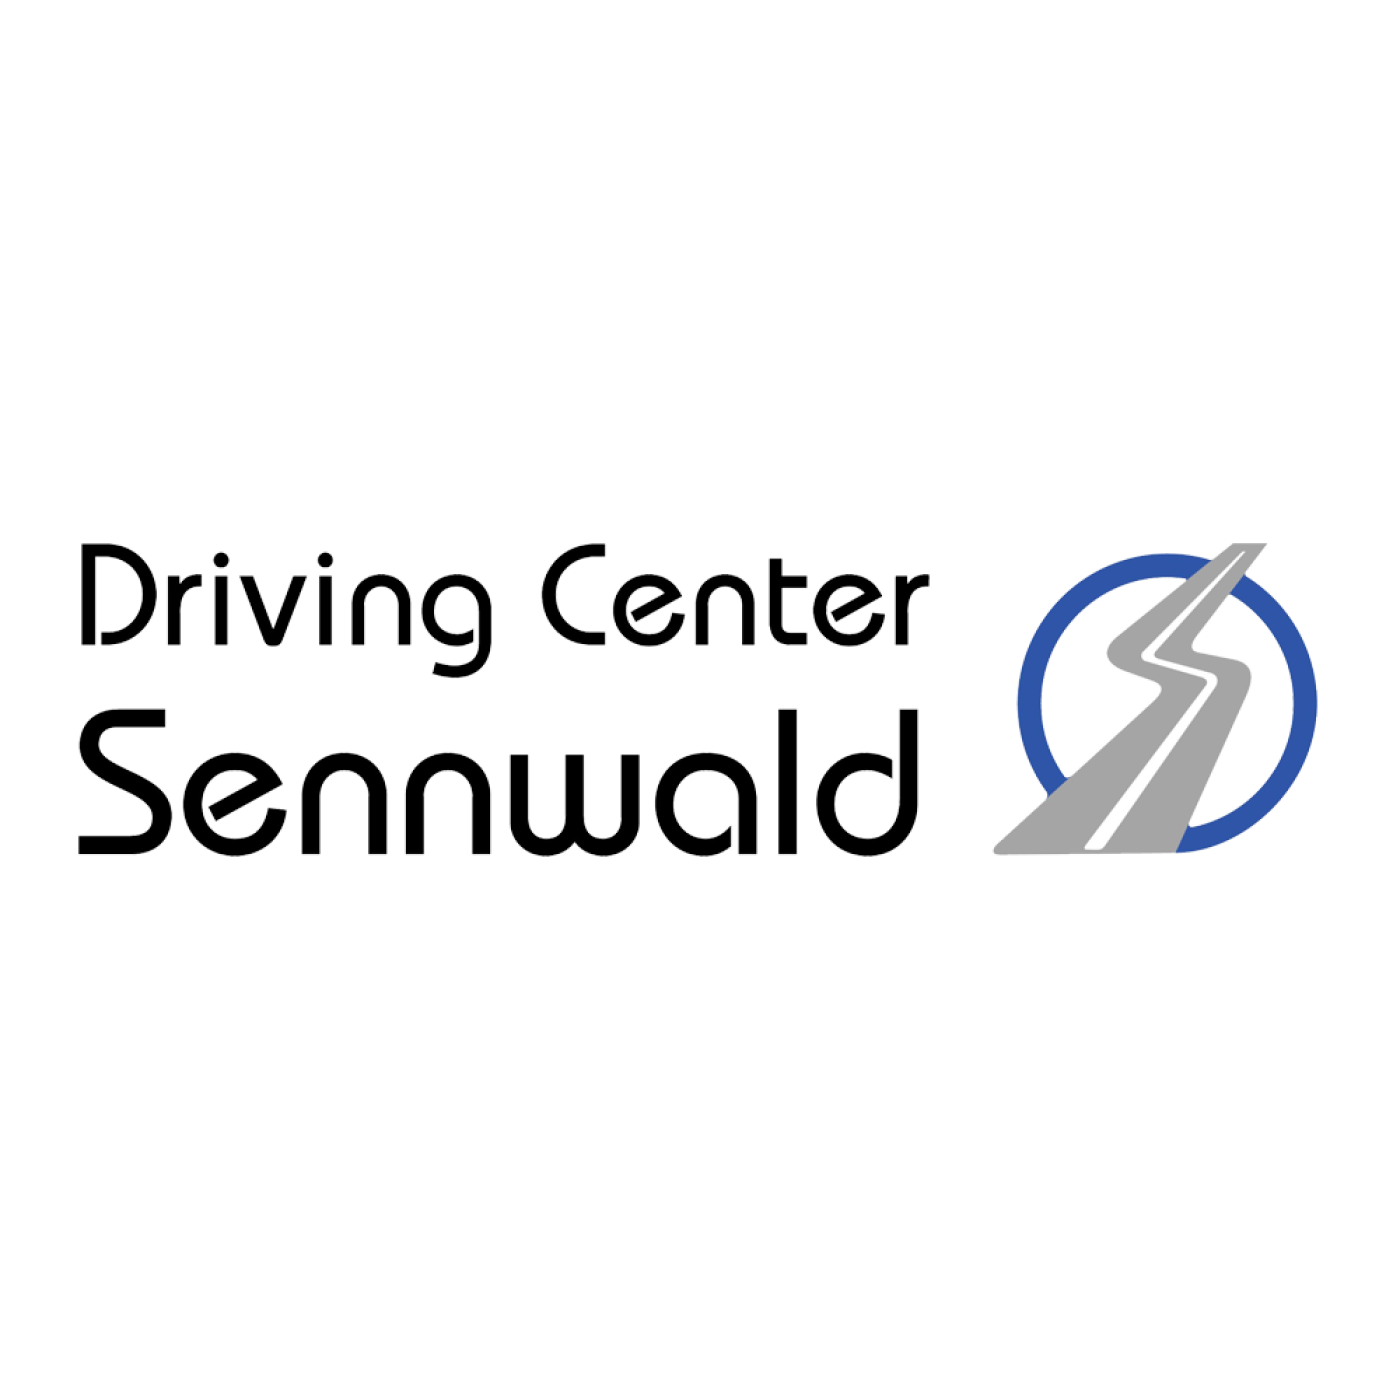 Logo_Referenz_ASSR-Driving-Center-Sennwald.png